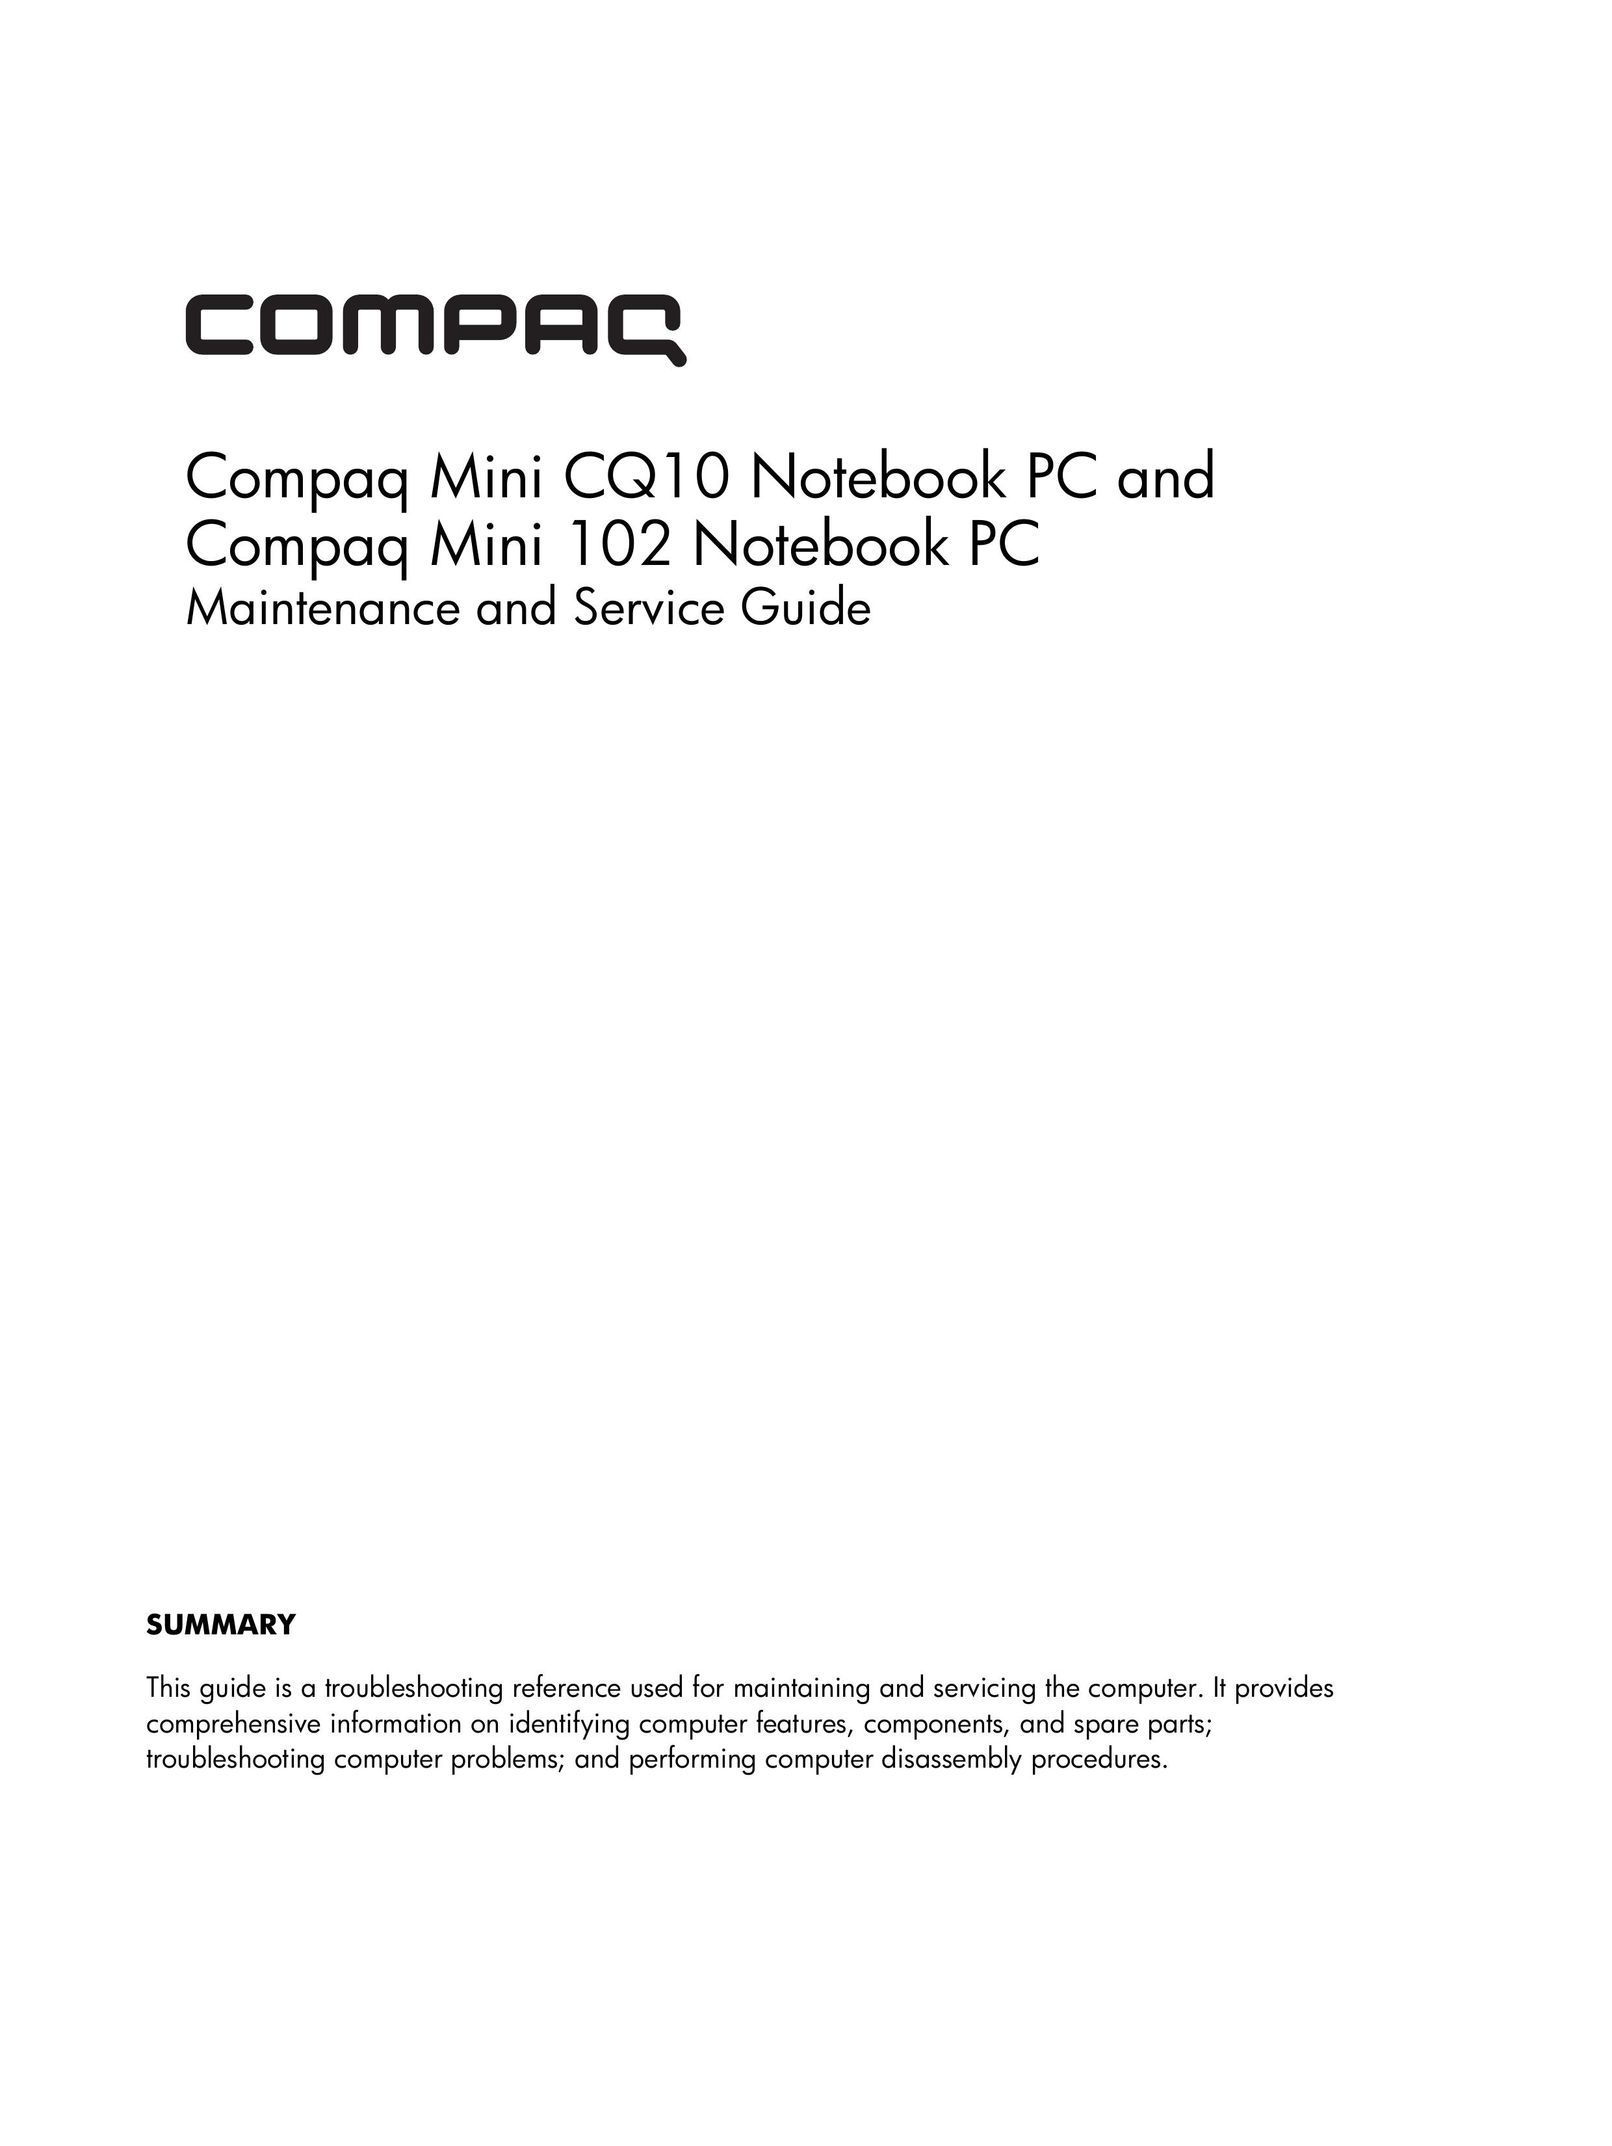 Compaq 102 Laptop User Manual